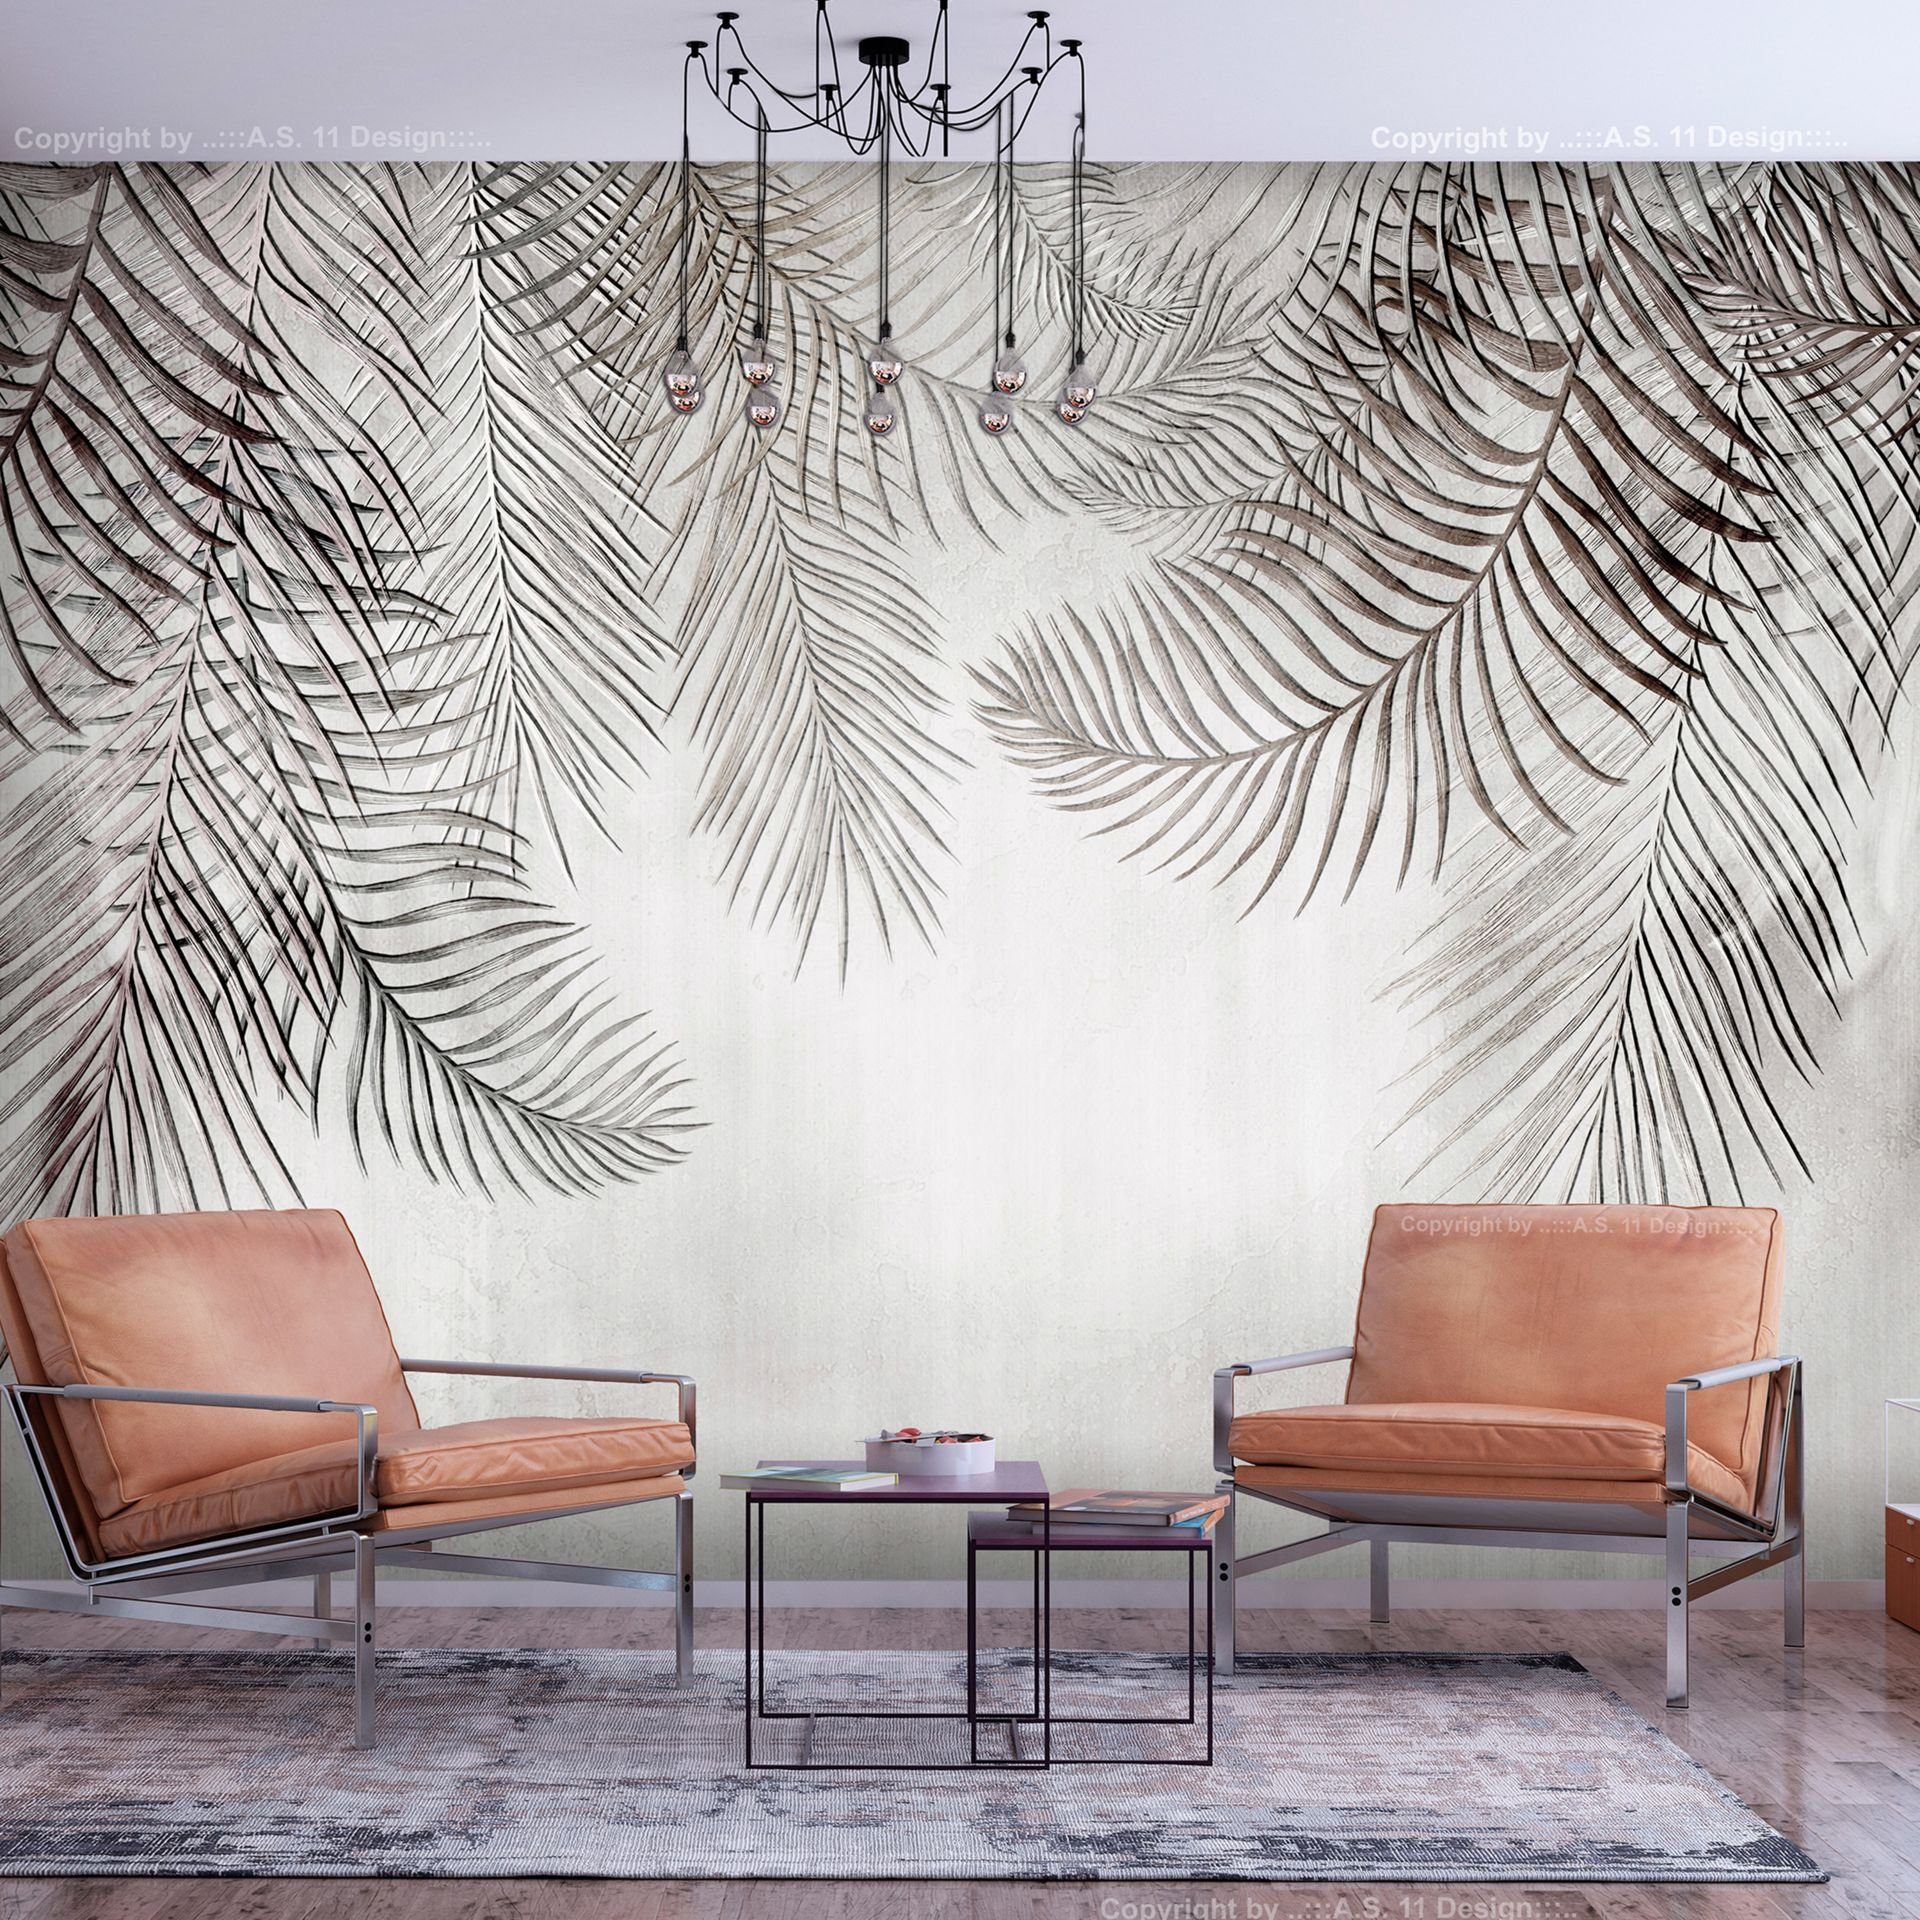 KUNSTLOFT Vliestapete Night Palm Trees 0.98x0.7 m, halb-matt, matt, lichtbeständige Design Tapete